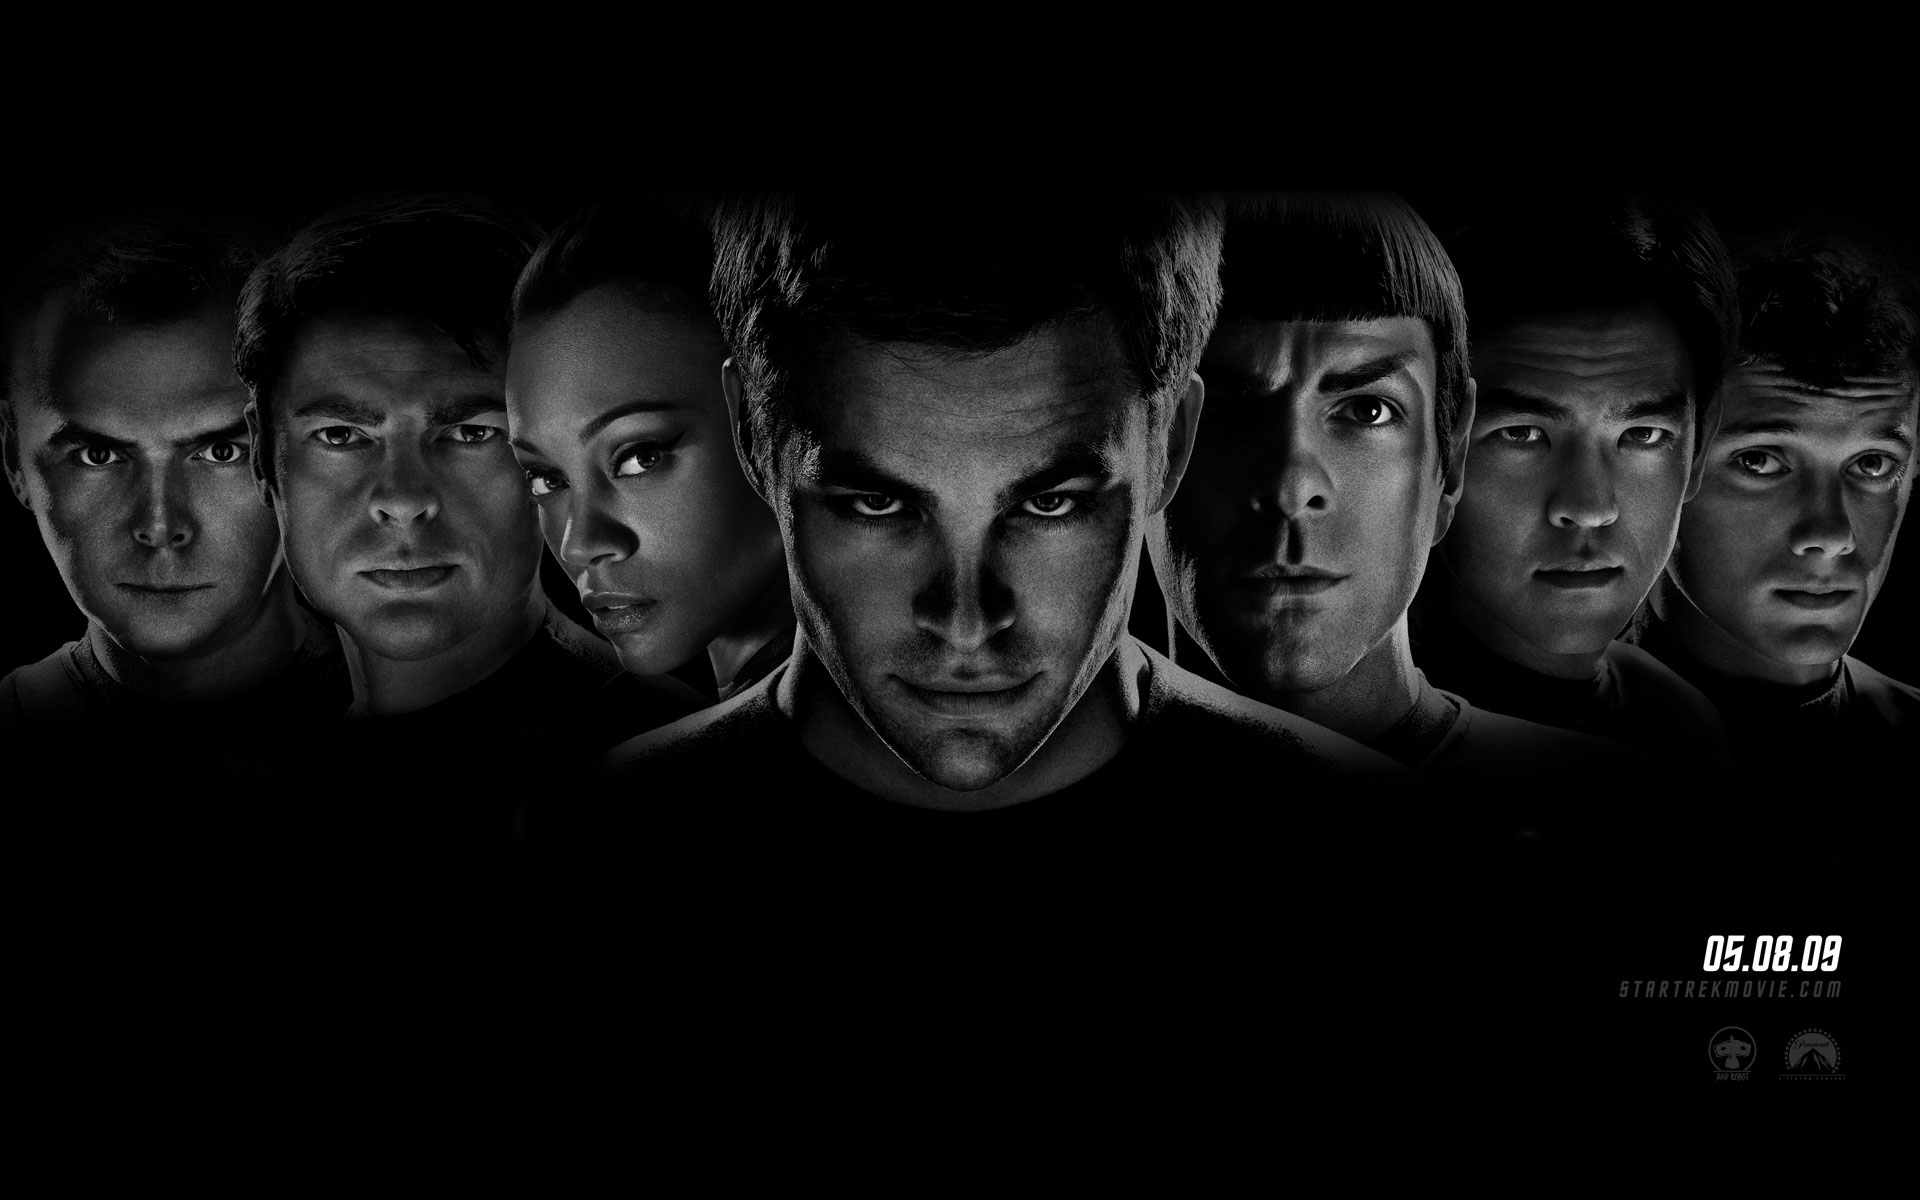 Zavvi is releasing an Exclusive Star Trek XI Blu-ray Steelbook with alternate artwork in the UK